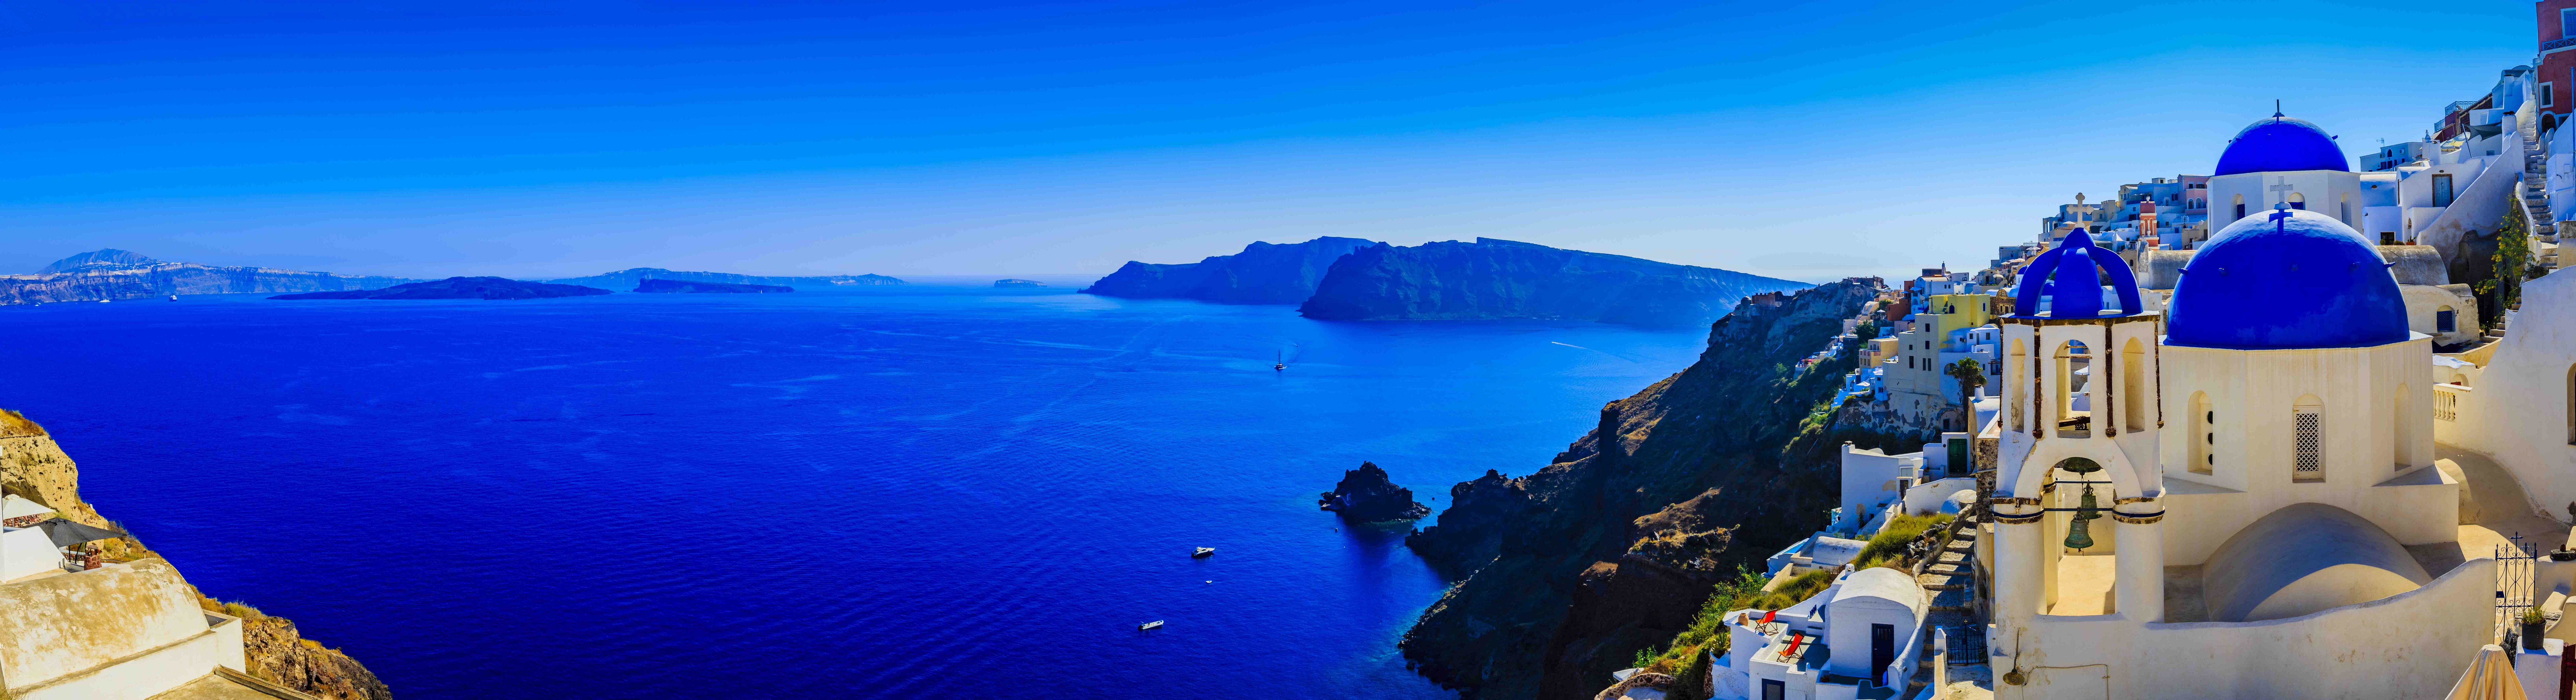 Santorini Greece Private Jet Charter | Private Flight To Greece ...